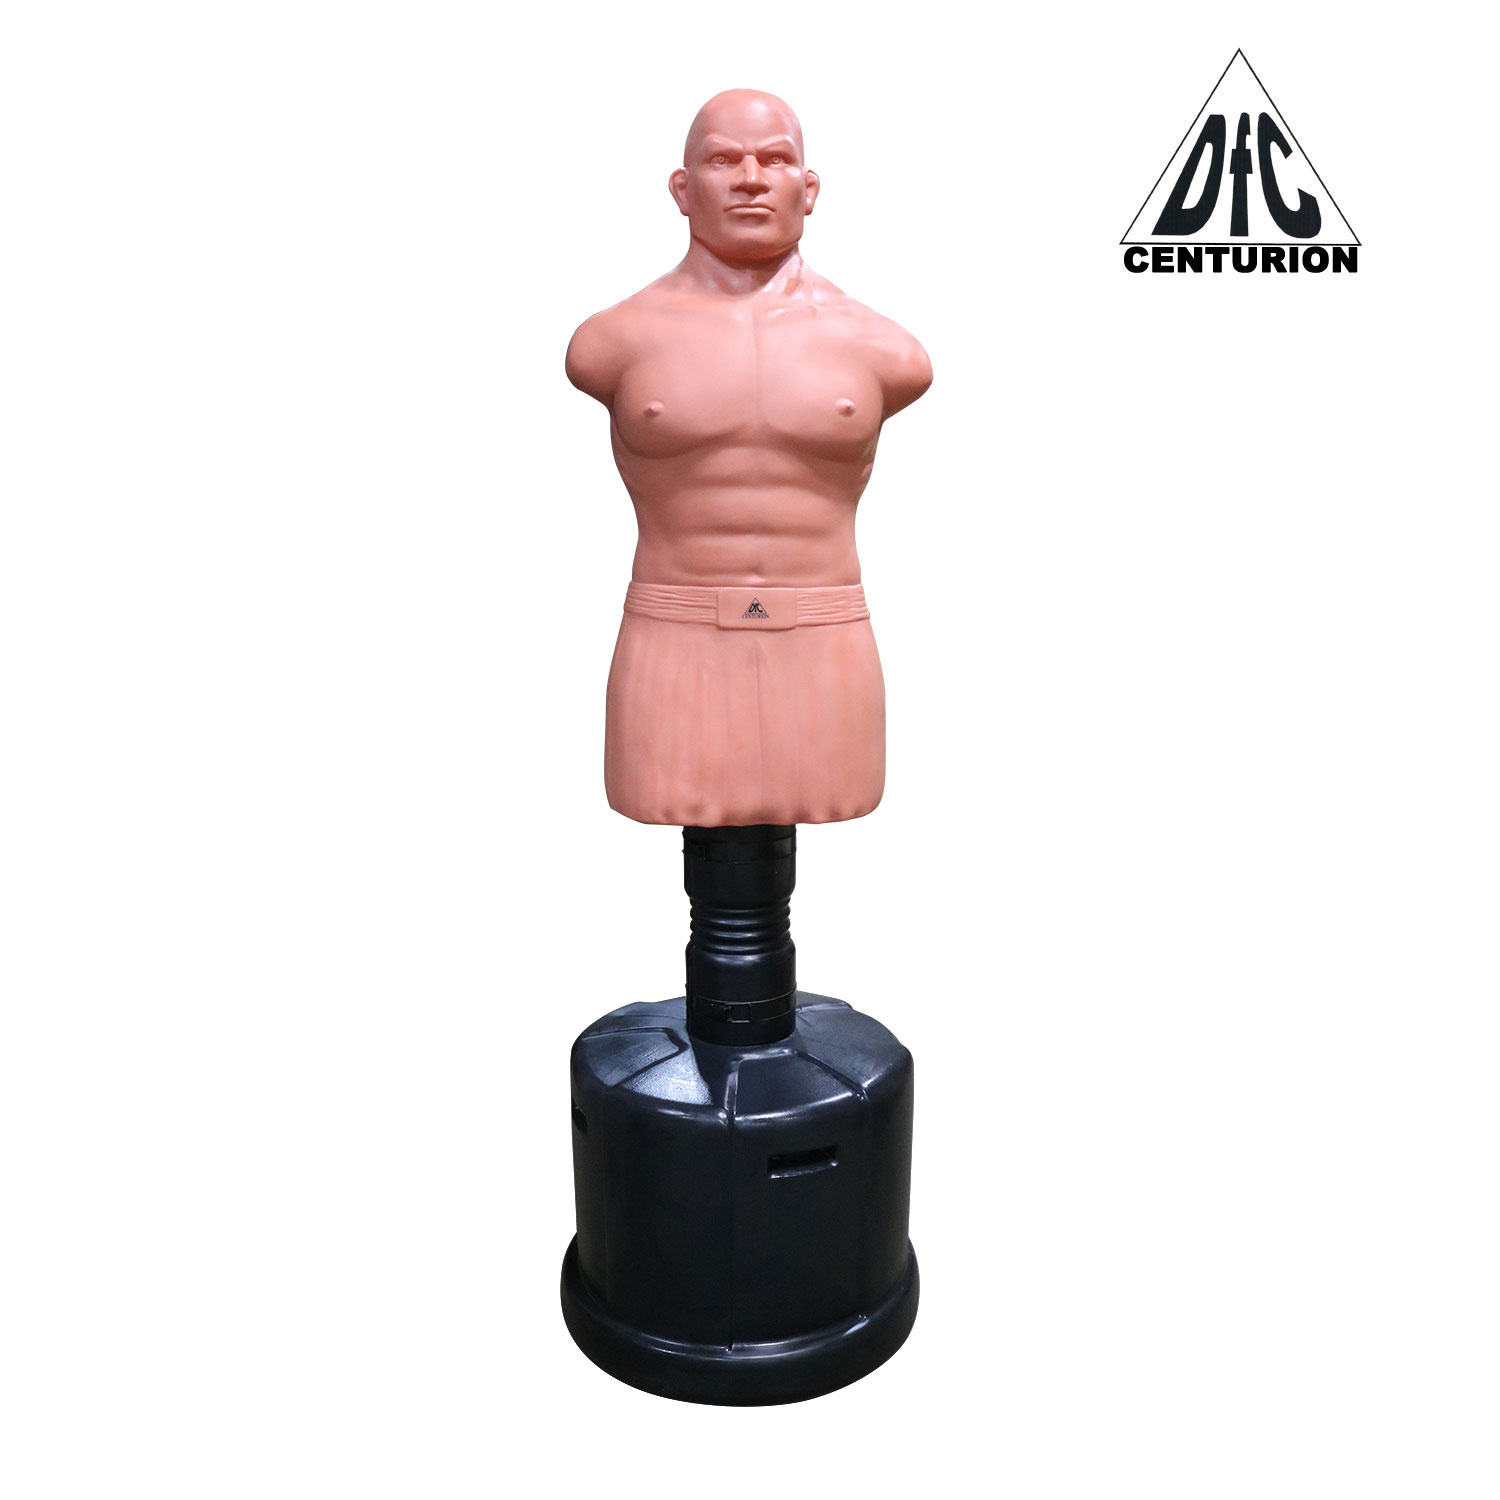 DFC Centurion Boxing Punching Man-Heavy водоналивной - бежевый из каталога манекенов для бокса в Санкт-Петербурге по цене 45990 ₽